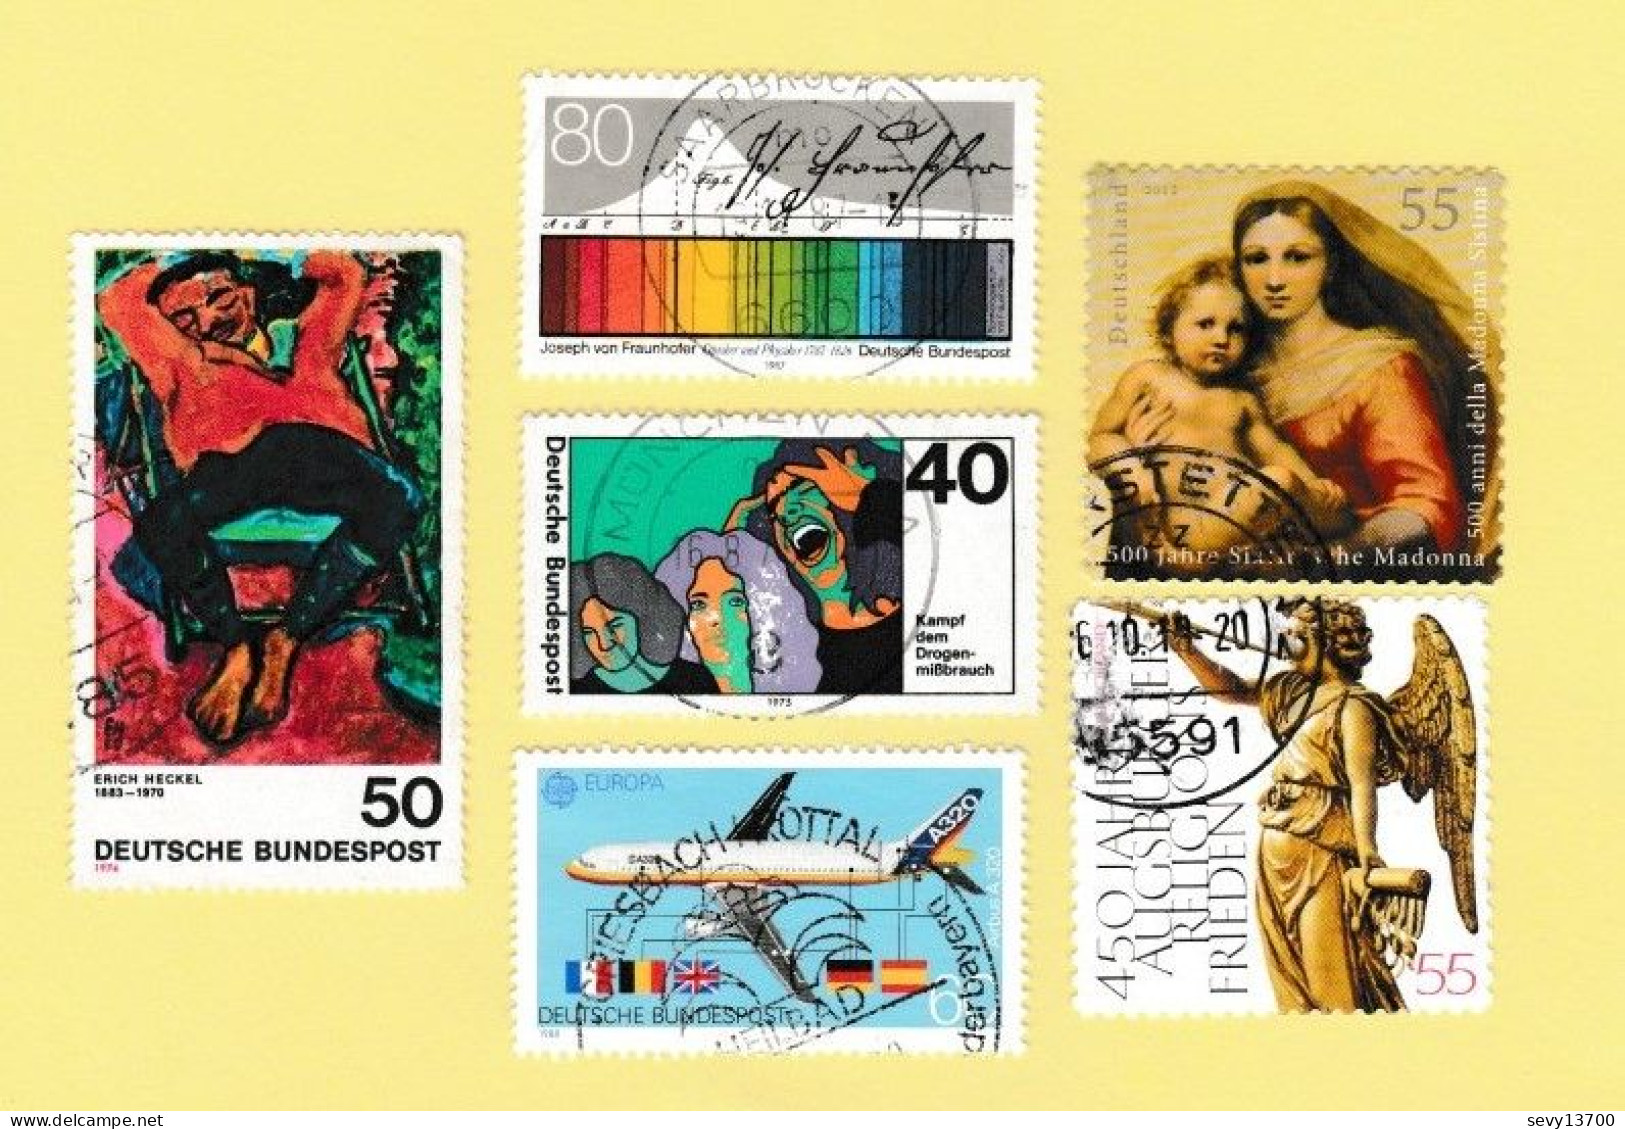 Allemagne - Deutsche Bundespost - RFA - lot de 95 timbres